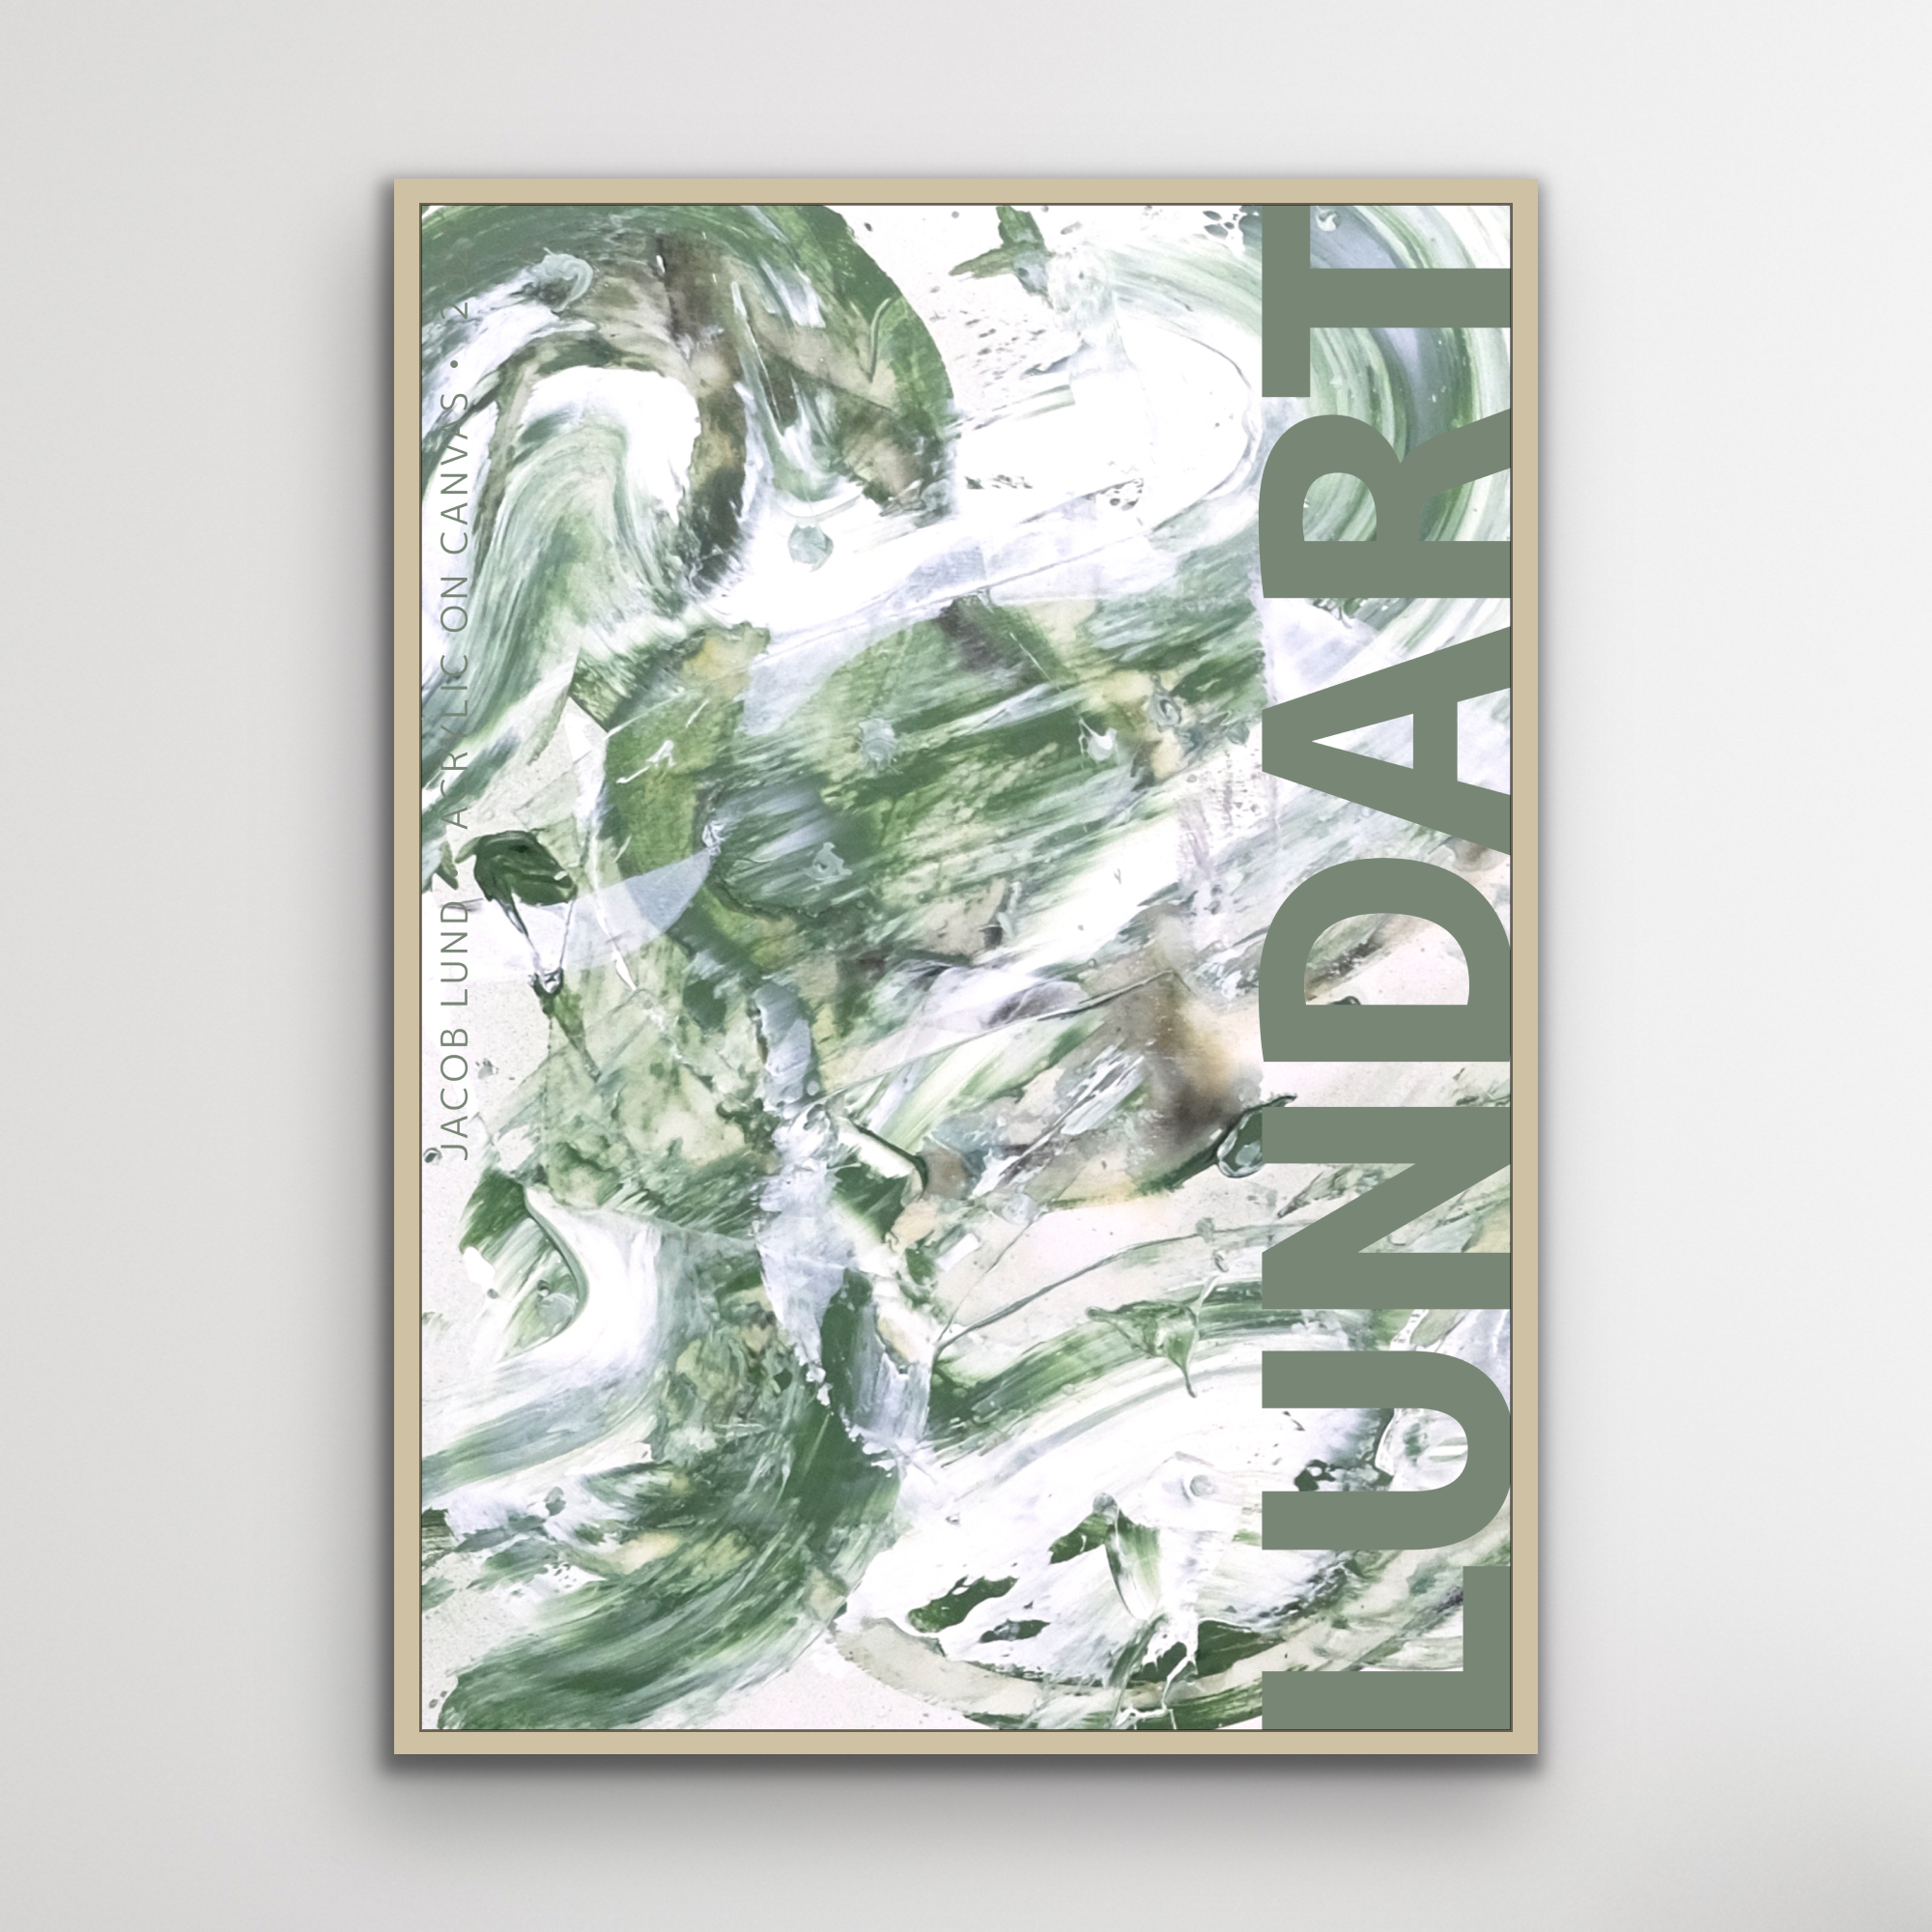 Poster: "Green Road - LUNDART"